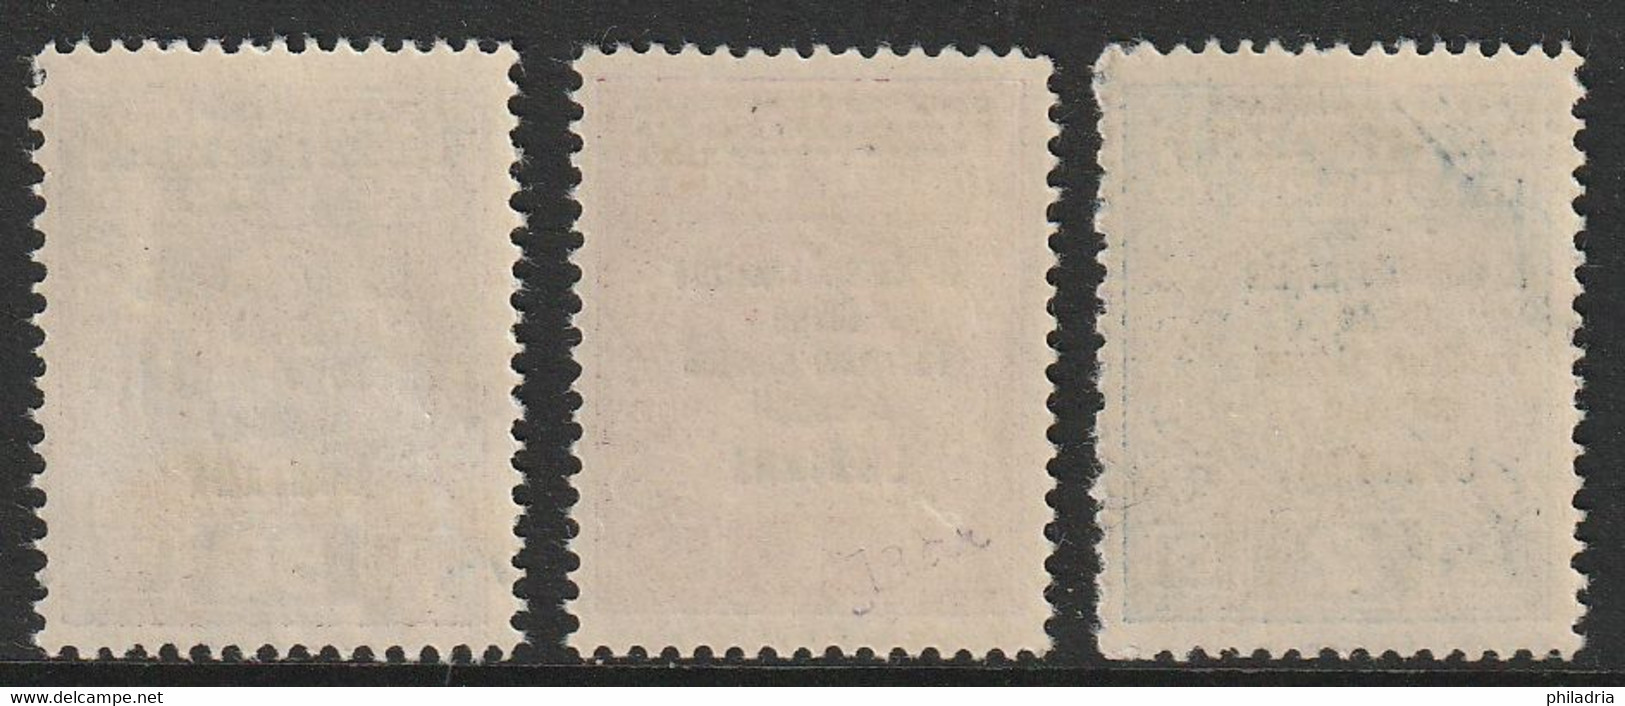 Lubiana, Ljubljana, 1941, Postage Due, R. Comm. Overprint, Modificated, Complete Set, MNH, Good Quality - Lubiana